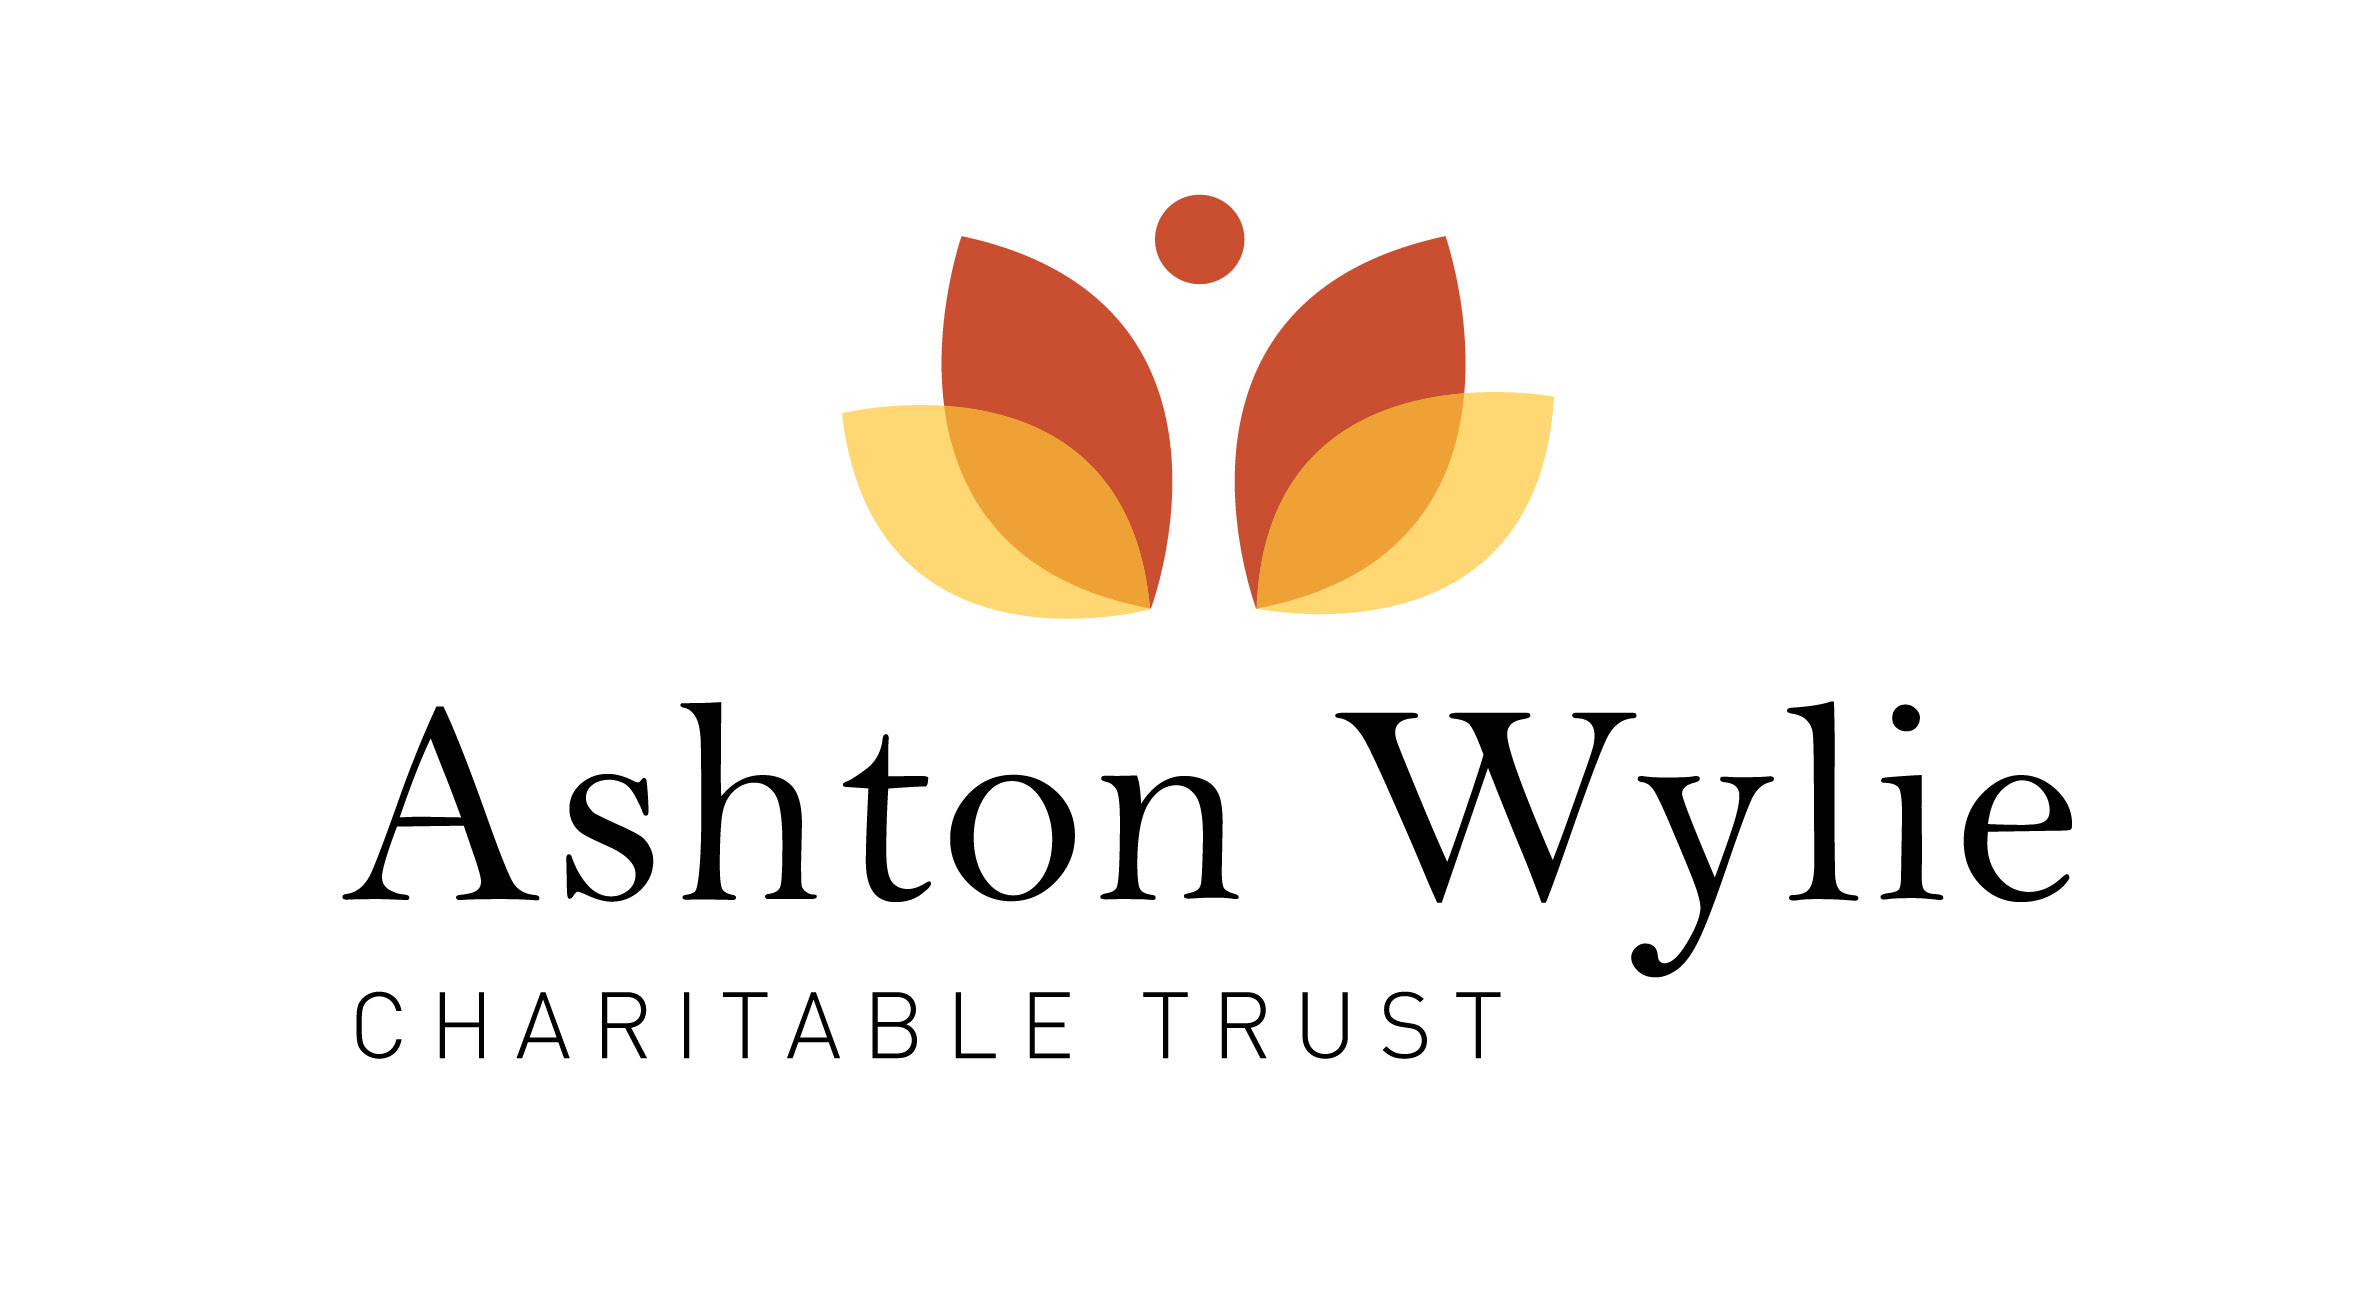 Ashton Wylie Charitable Trust